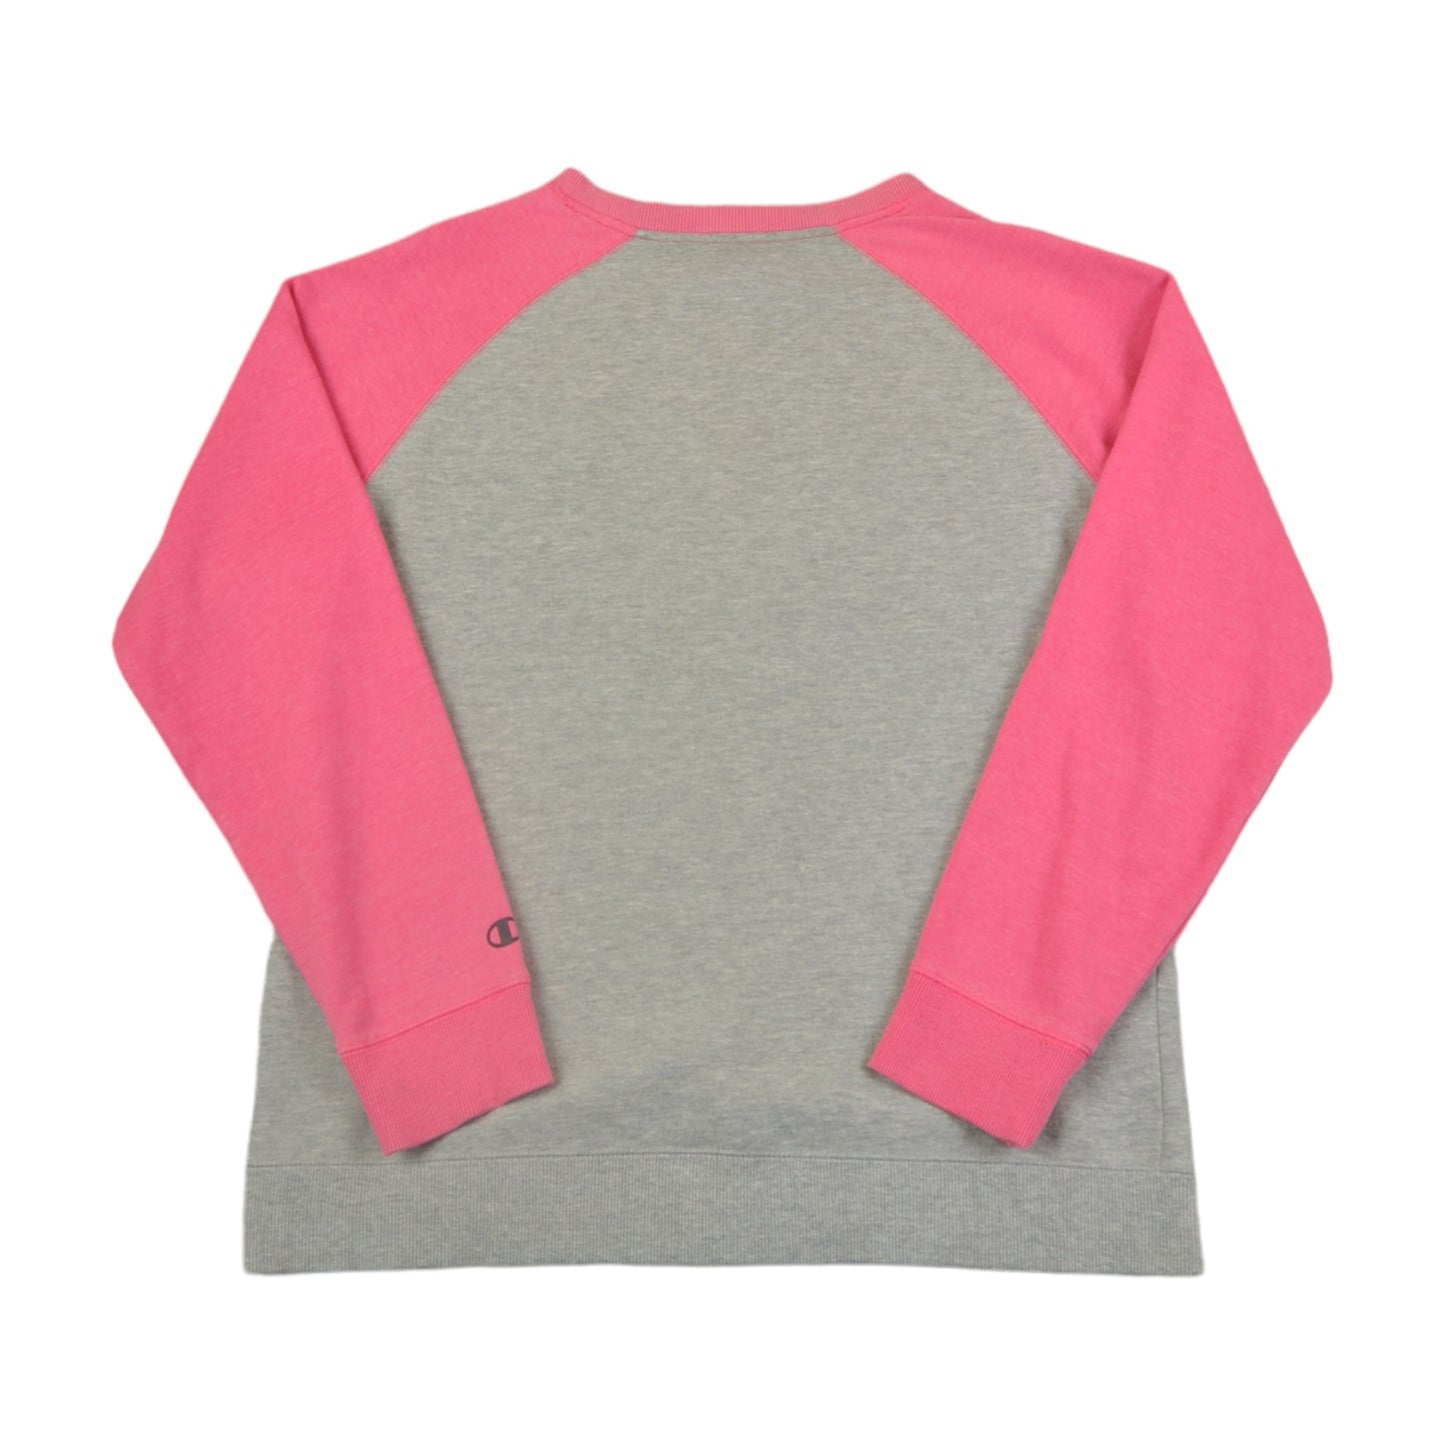 Vintage Champion Crew Neck Sweatshirt Grey/Pink Ladies XL